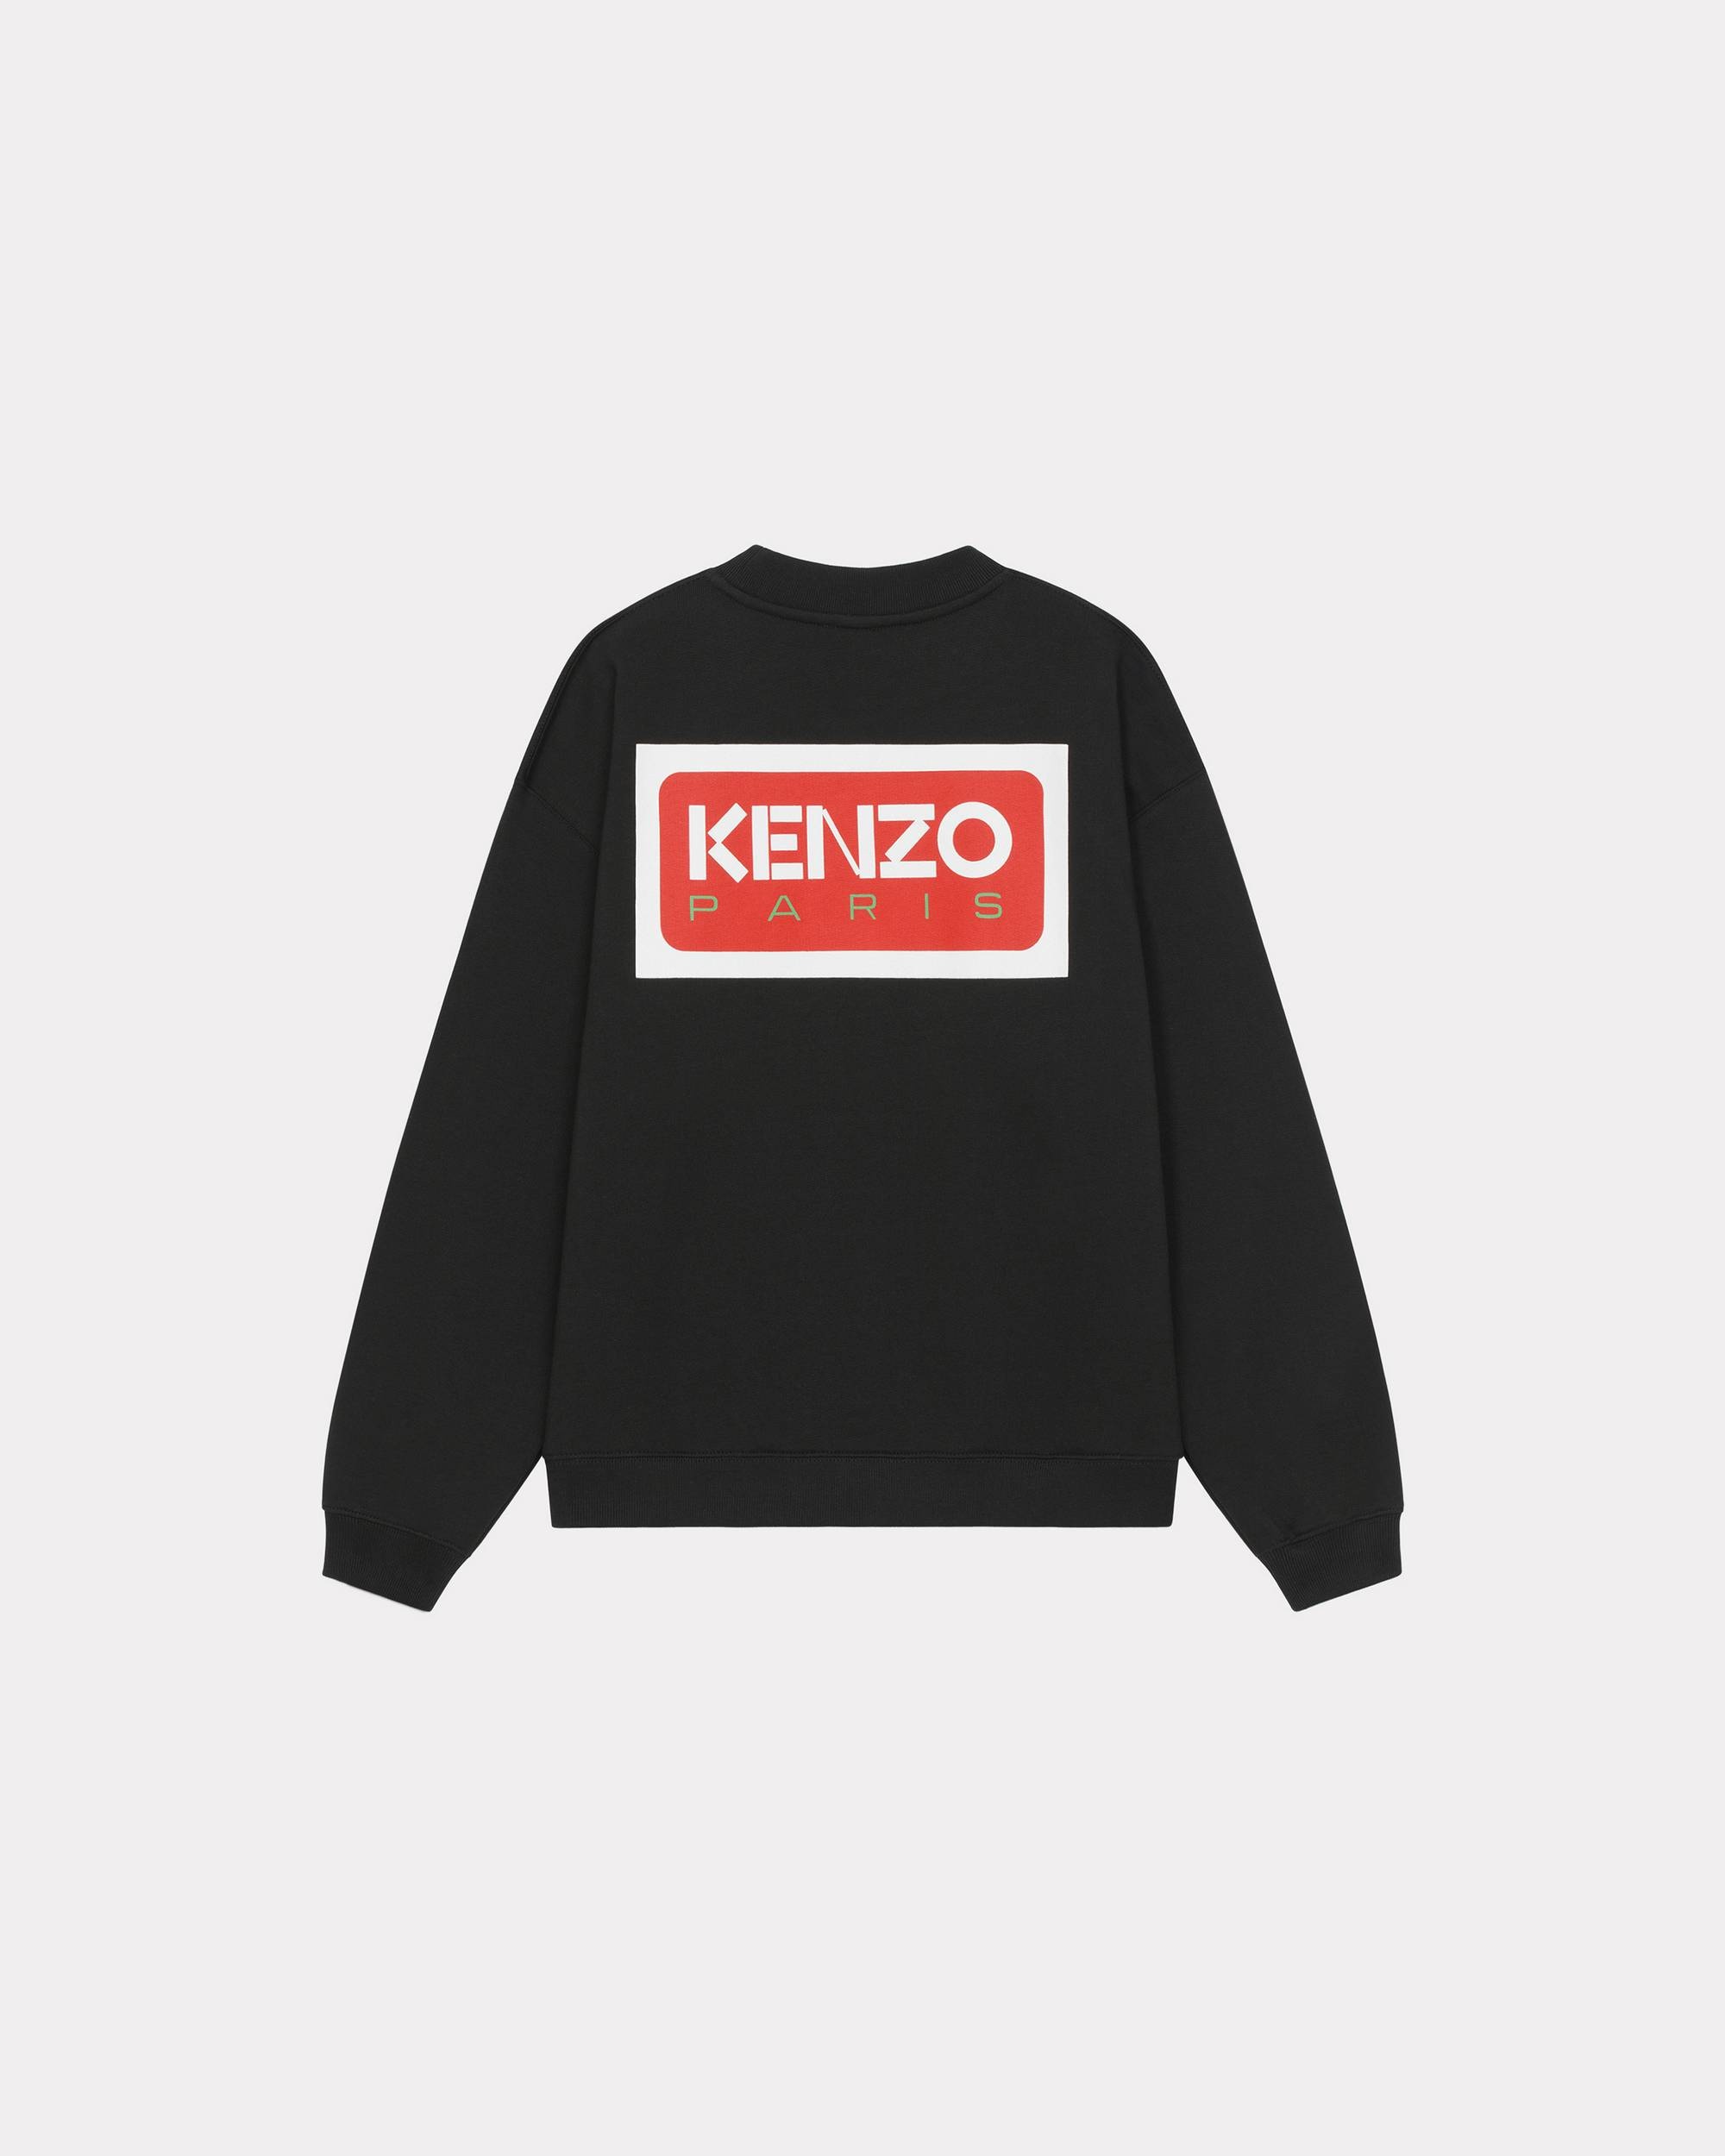 KENZO Paris sweatshirt - 2